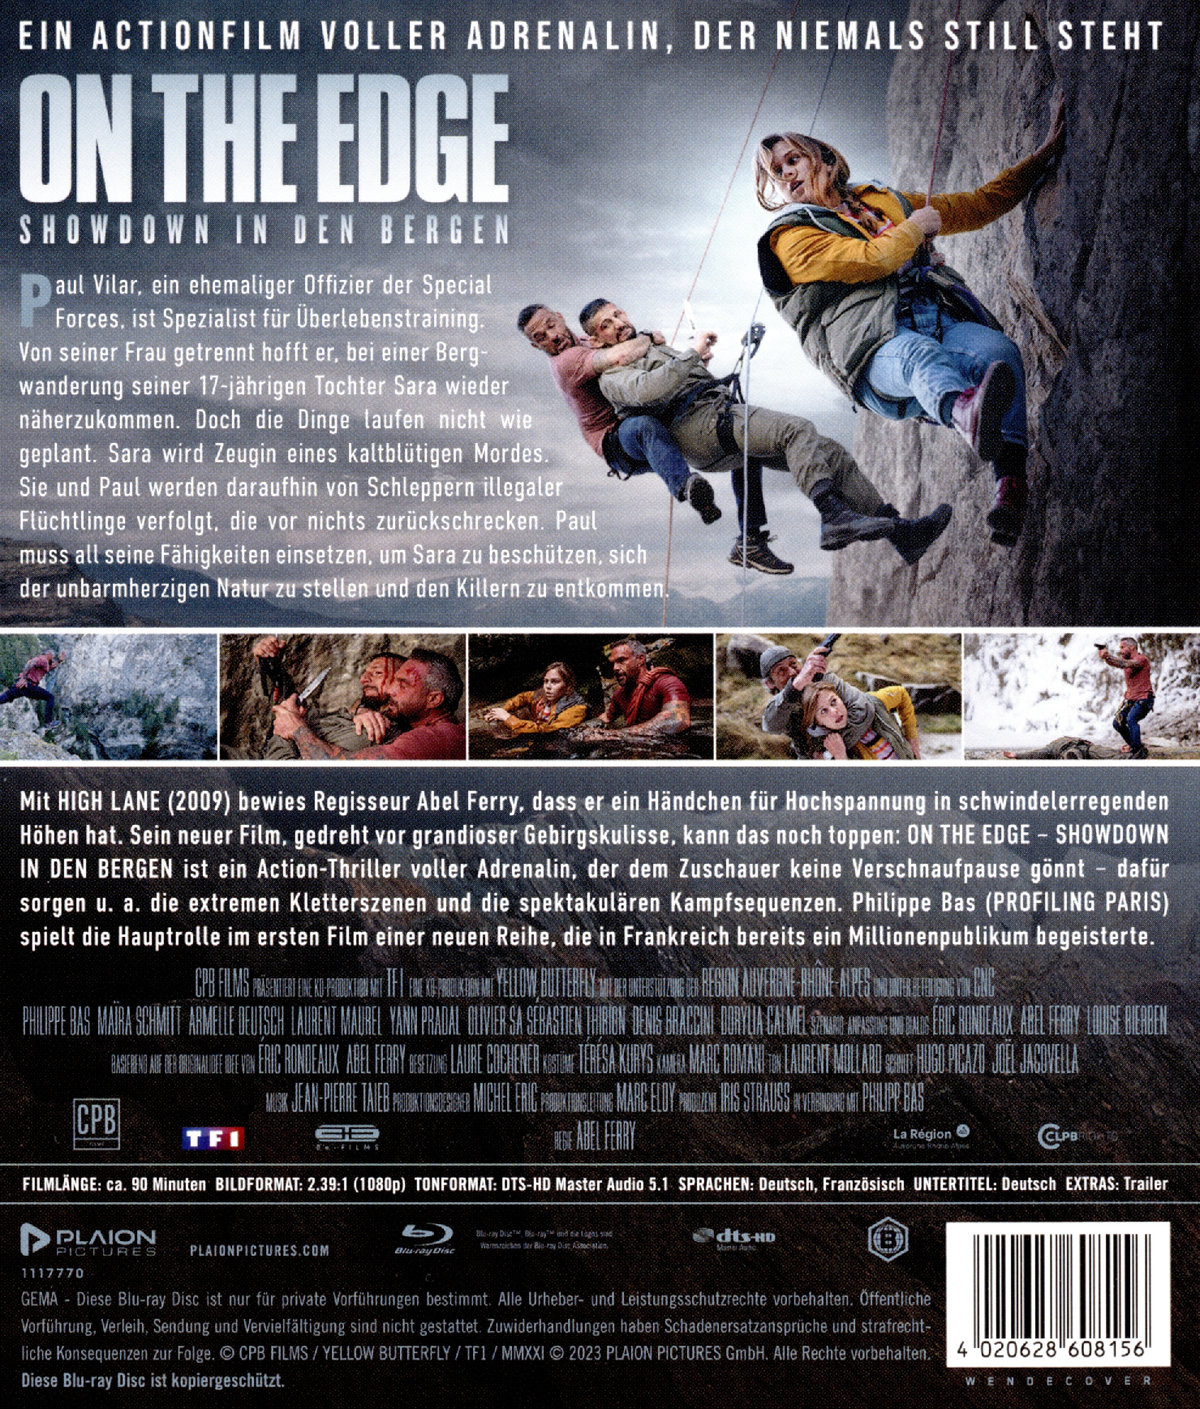 On the Edge: Showdown in den Bergen  (Blu-ray Disc)